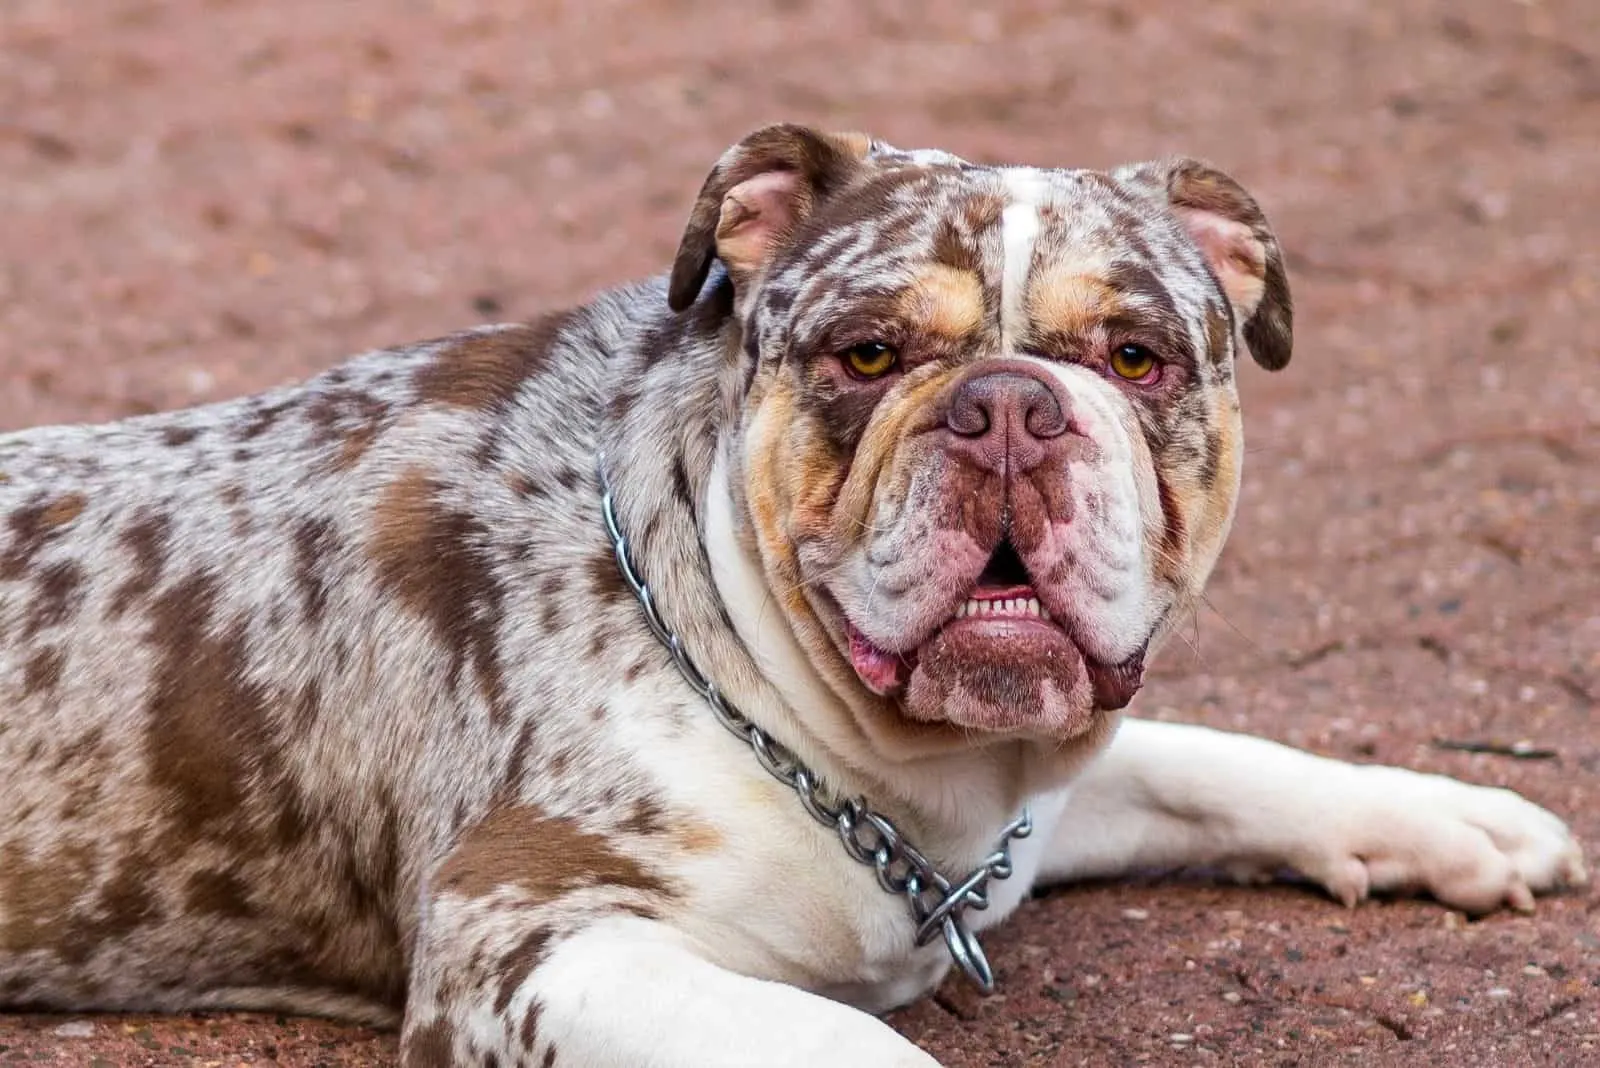 merle or mottled english bulldog lying down on close up photography